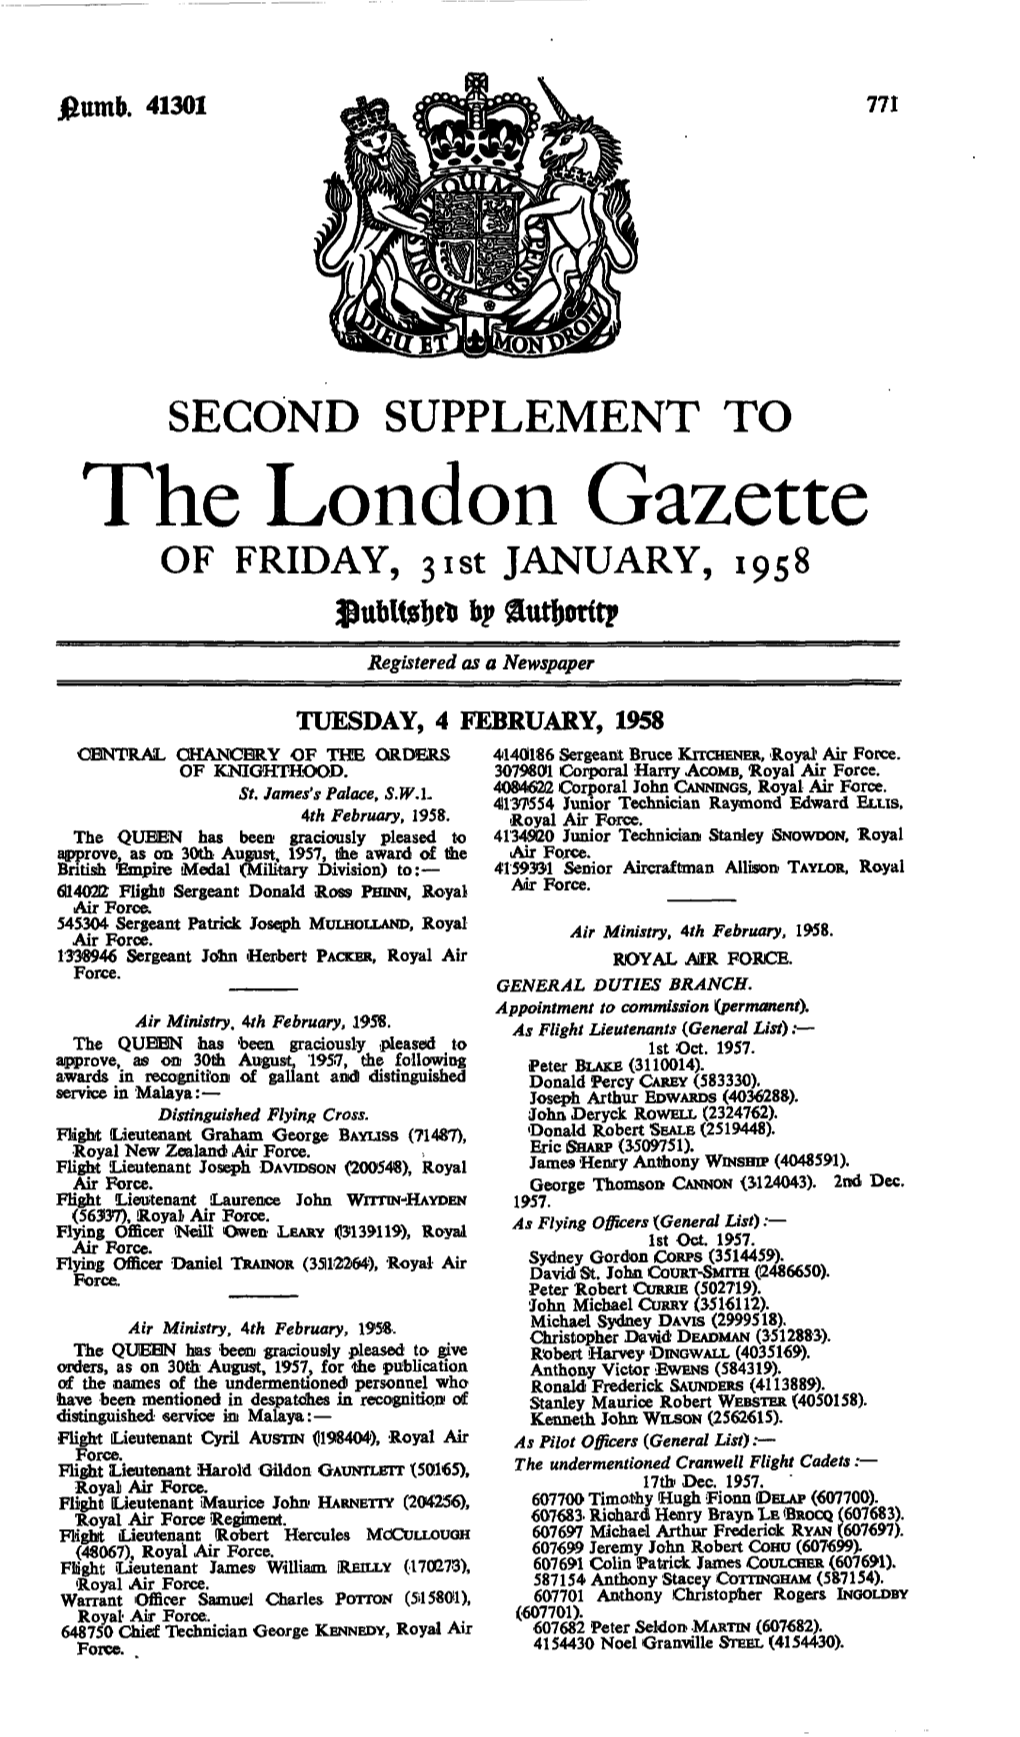 The London Gazette of FRIDAY, 3Ist JANUARY, 1958 B?